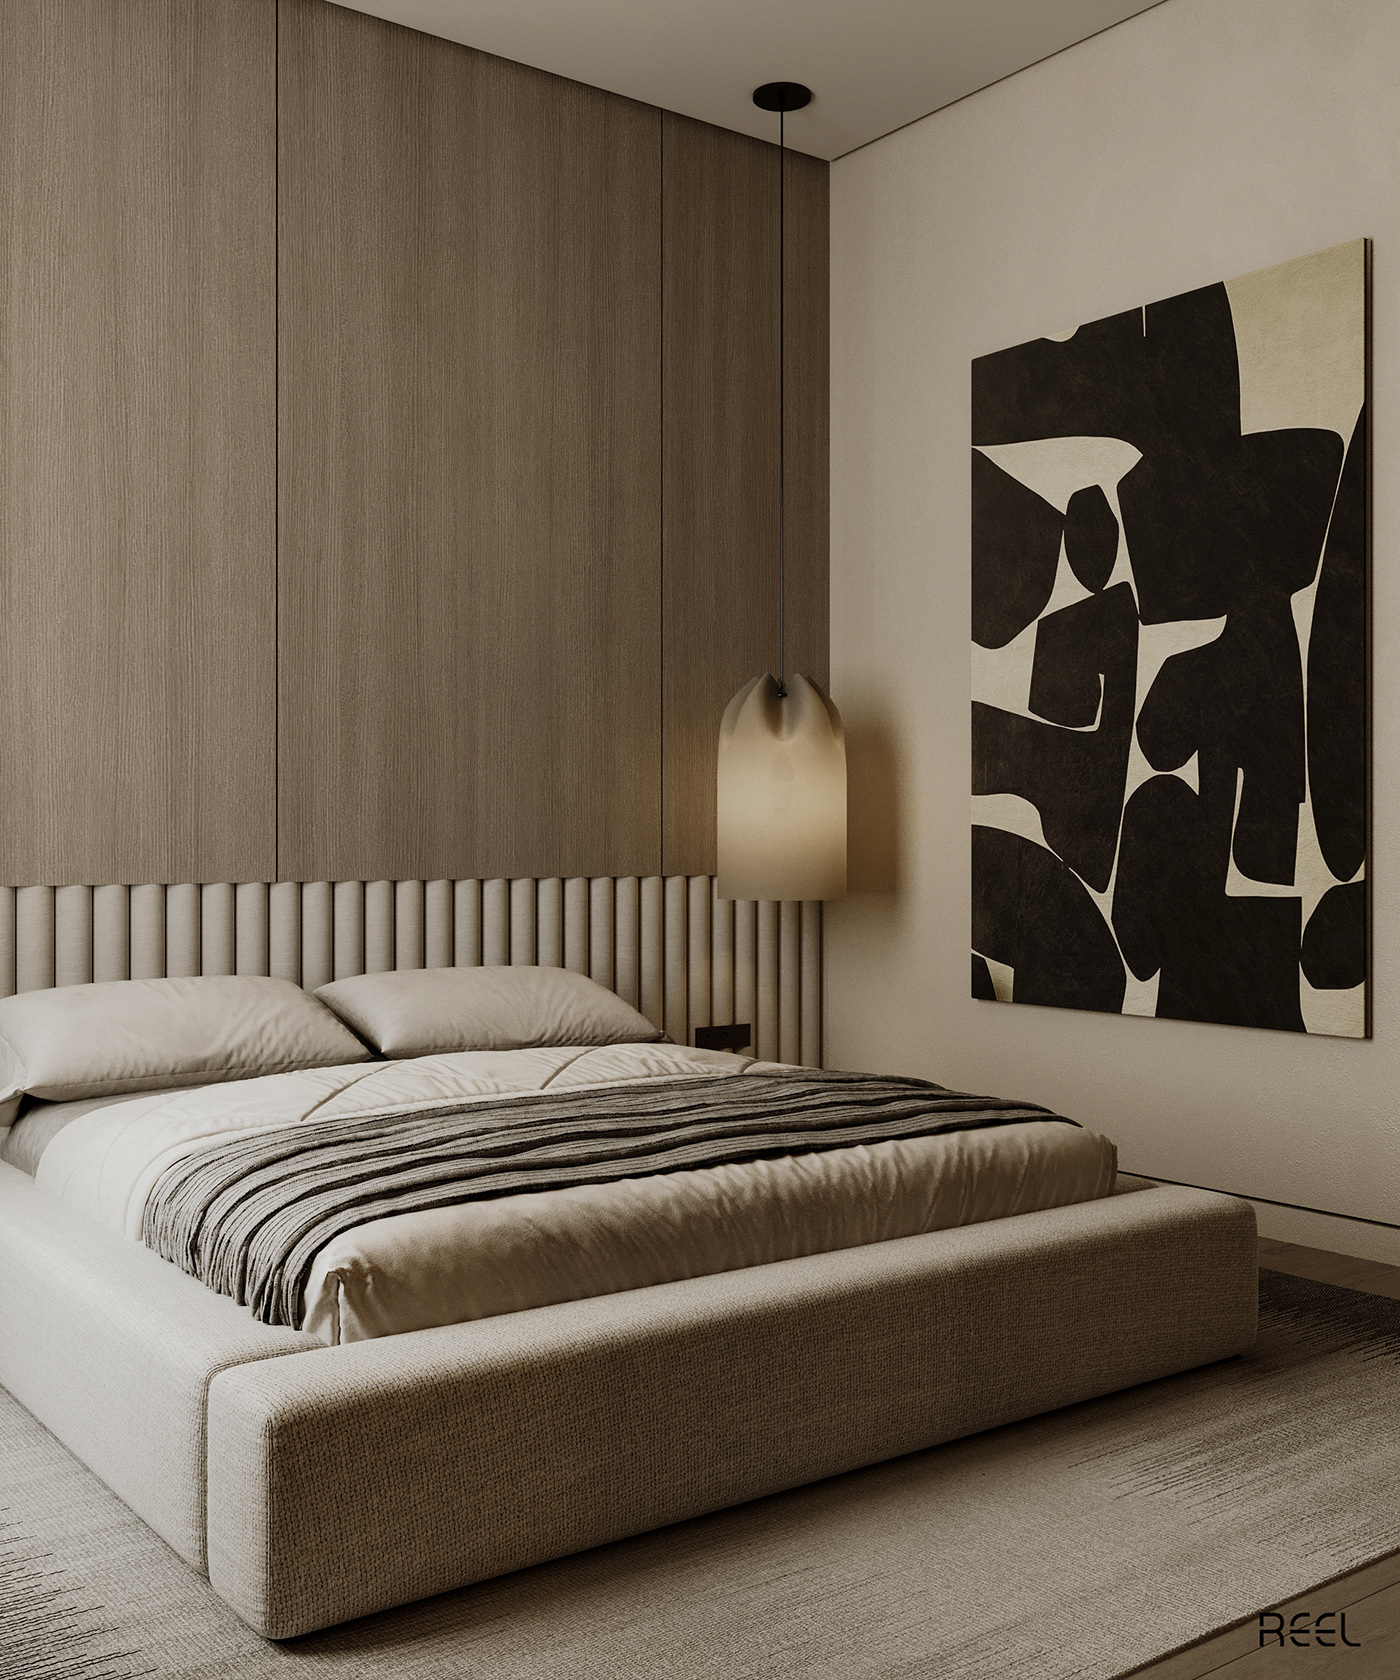 bed interior design  Render architecture modern 3D bedroom visualization 3ds max corona